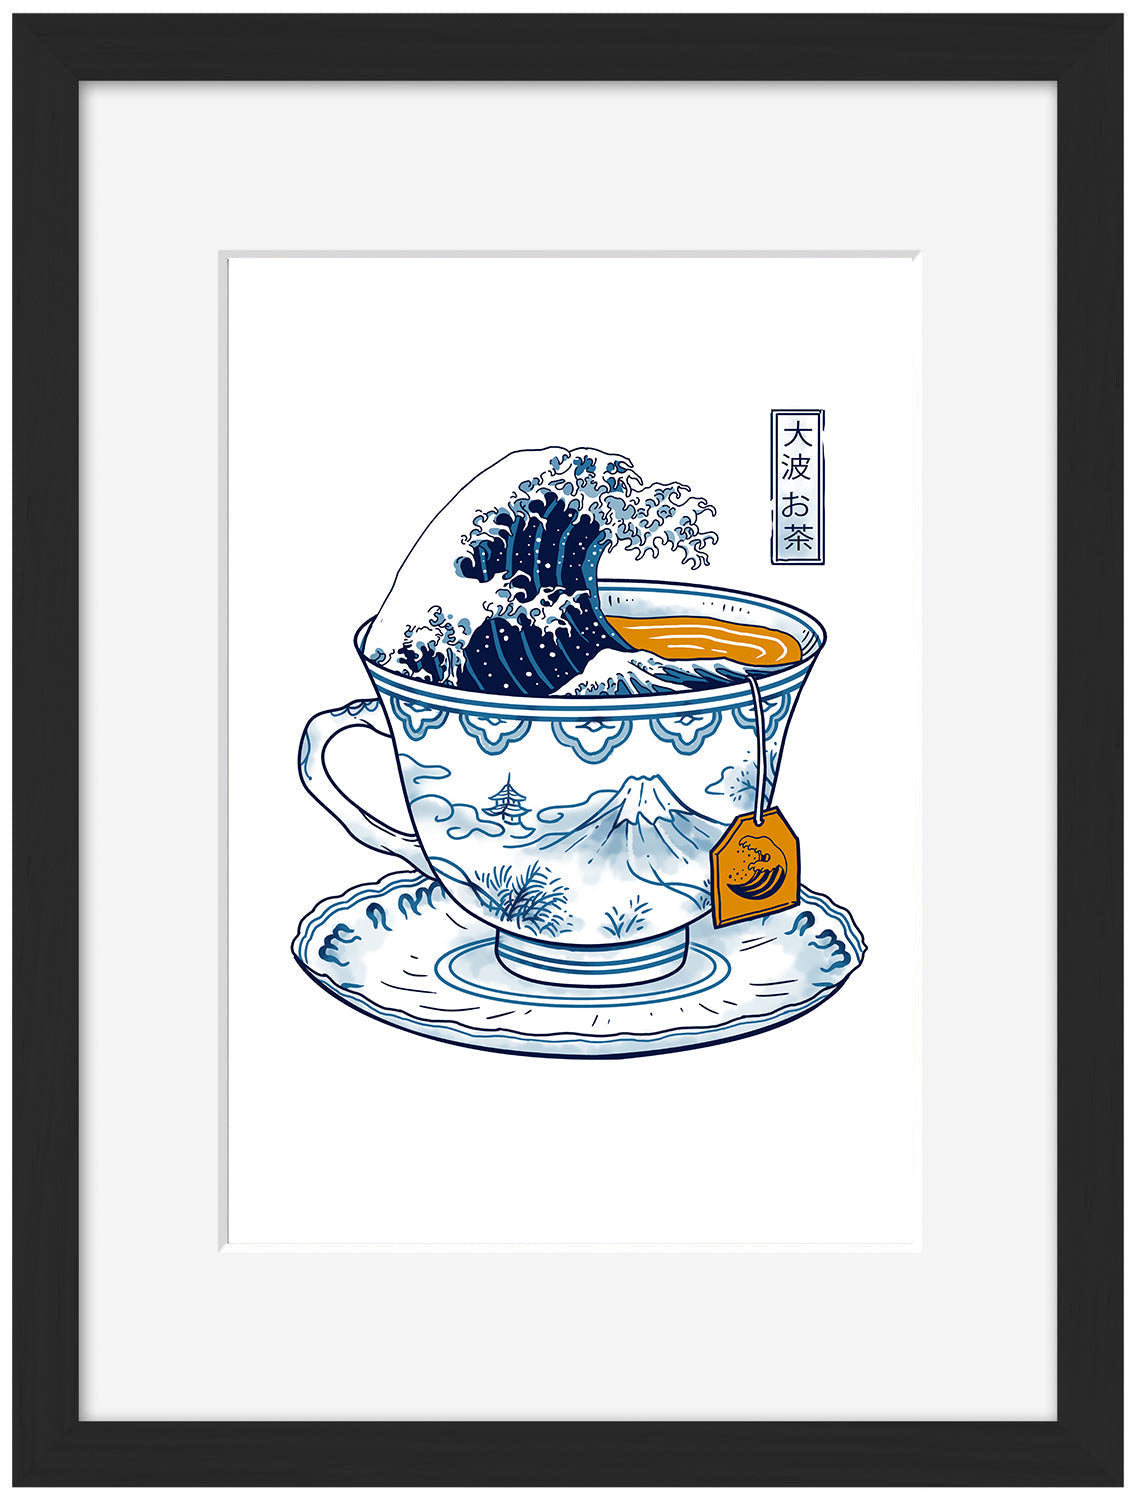 Great Kanagawa Tea-print, vincent-trinidad-Framed Print-30 x 40 cm-BLUE SHAKER